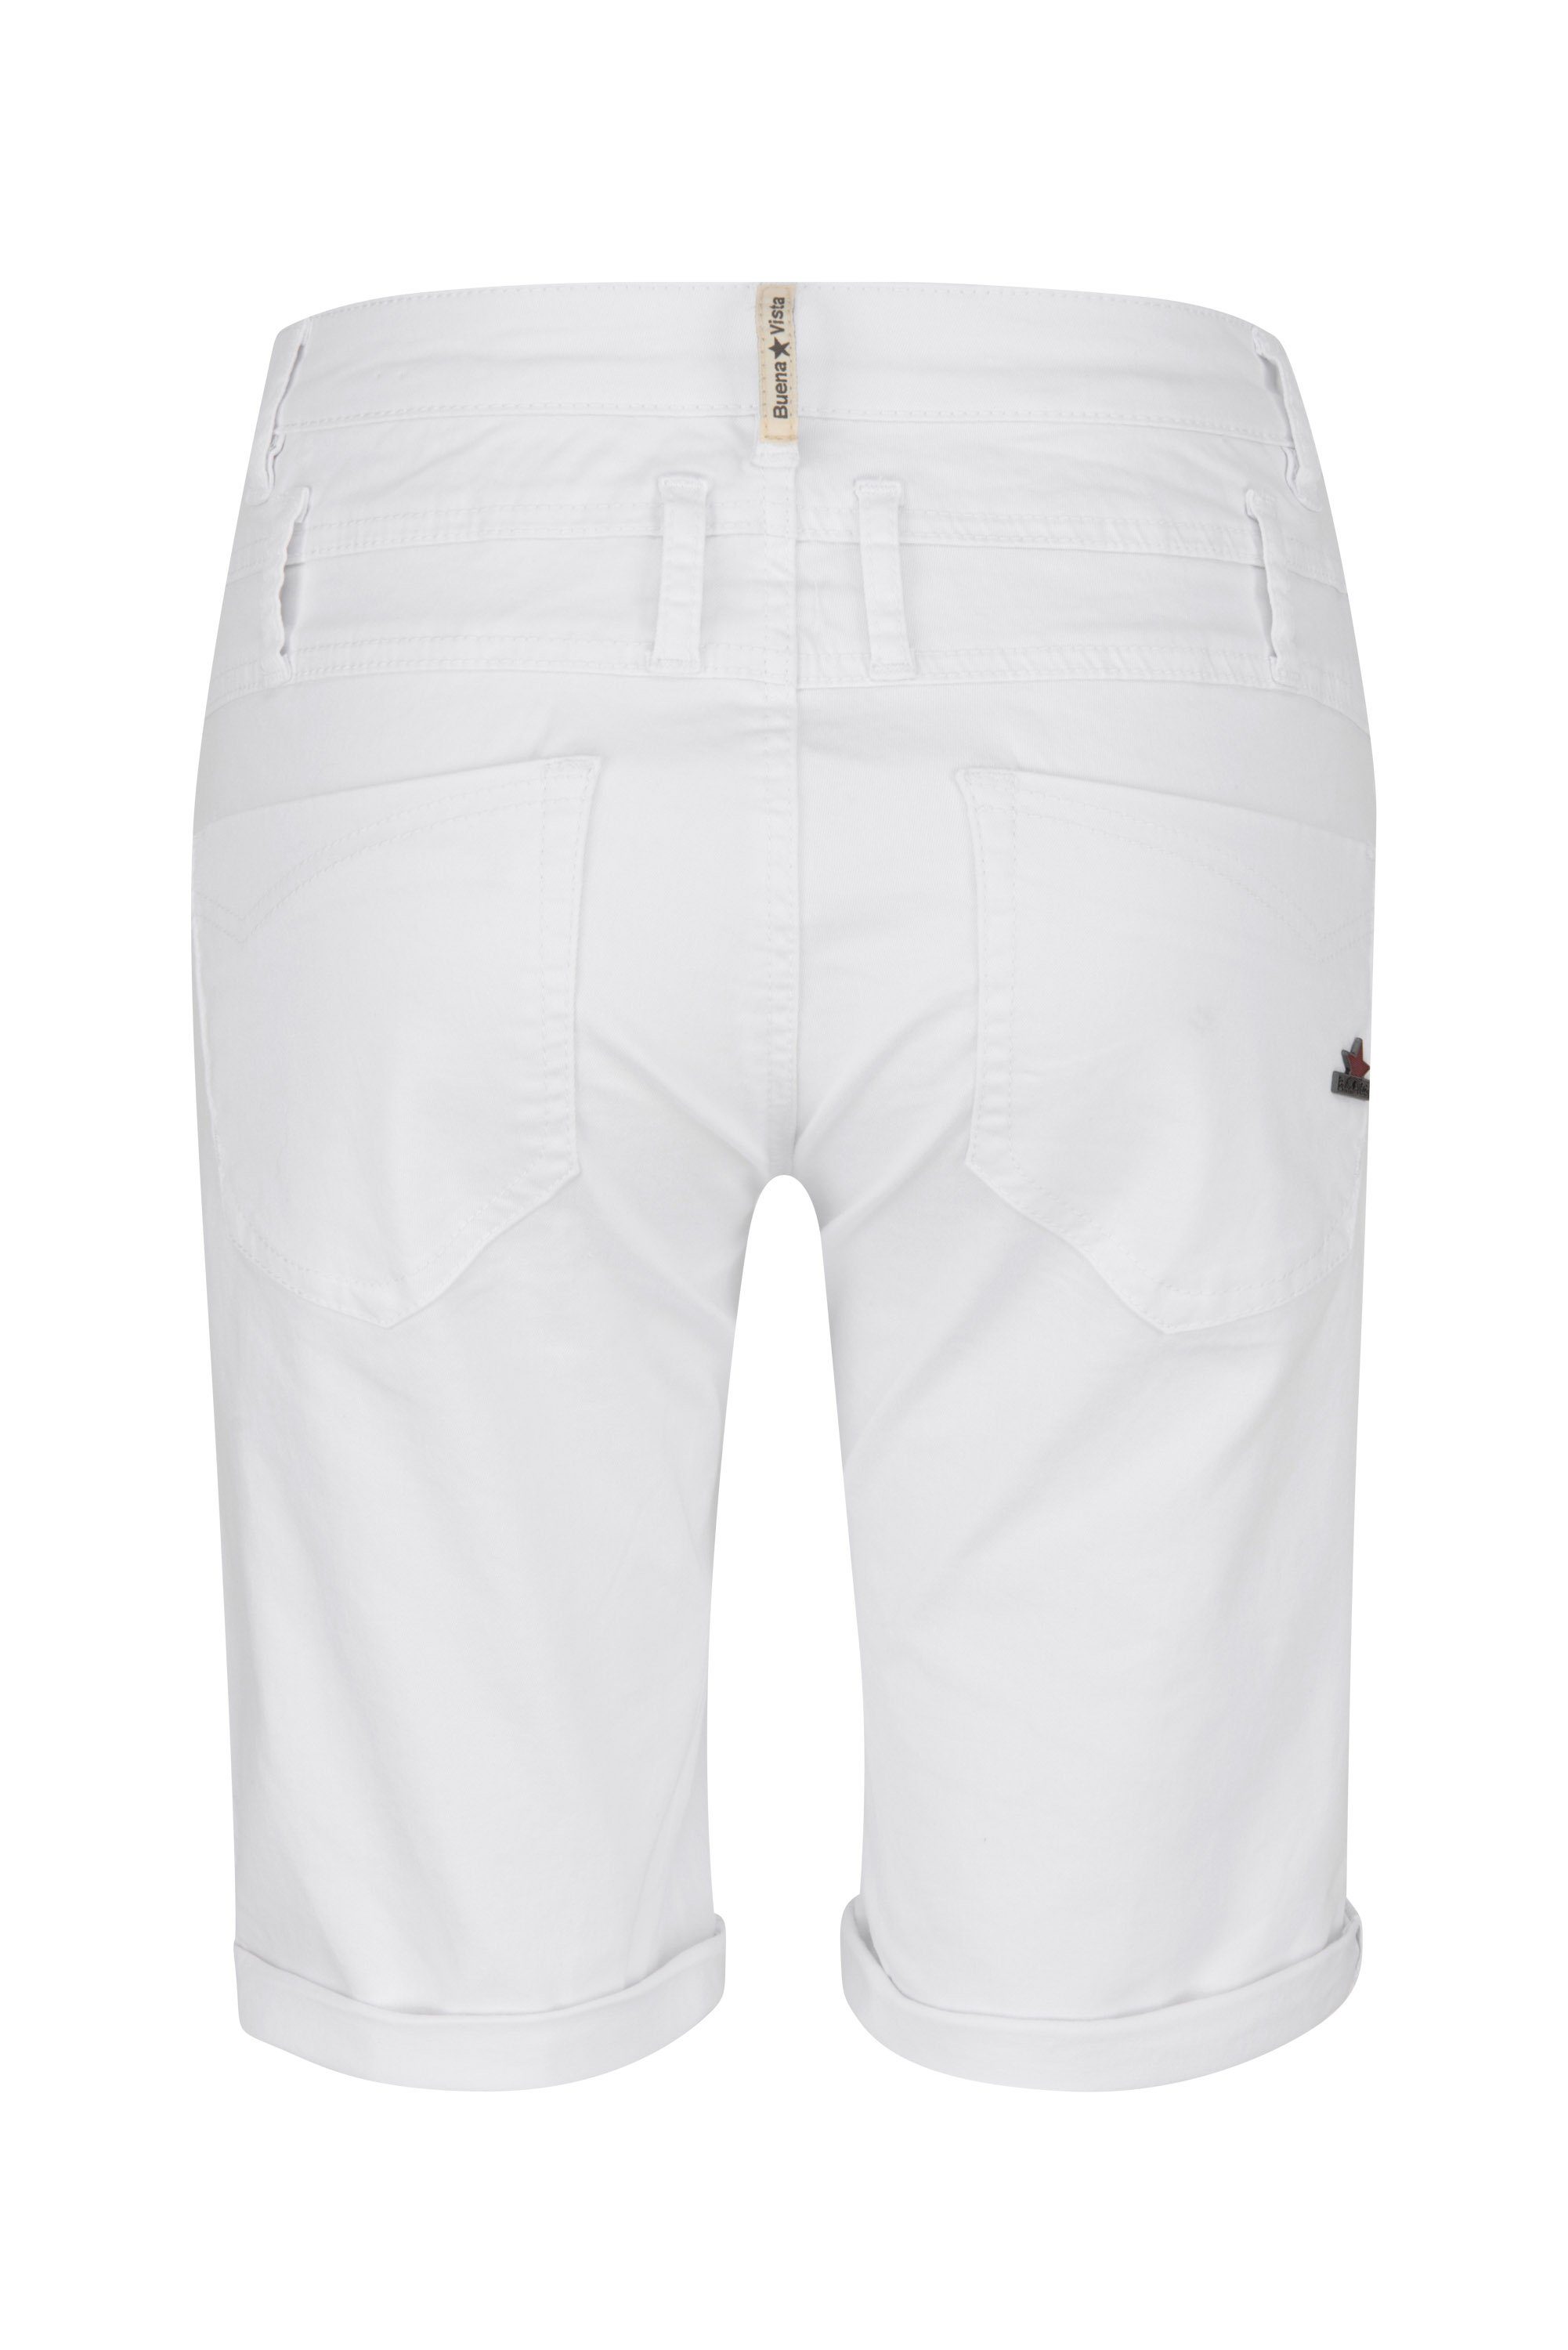 BUENA FLORIDA Stretch-Jeans SHORT Vista J5746 Twill - 502.032 2106 Stretch VISTA white Buena